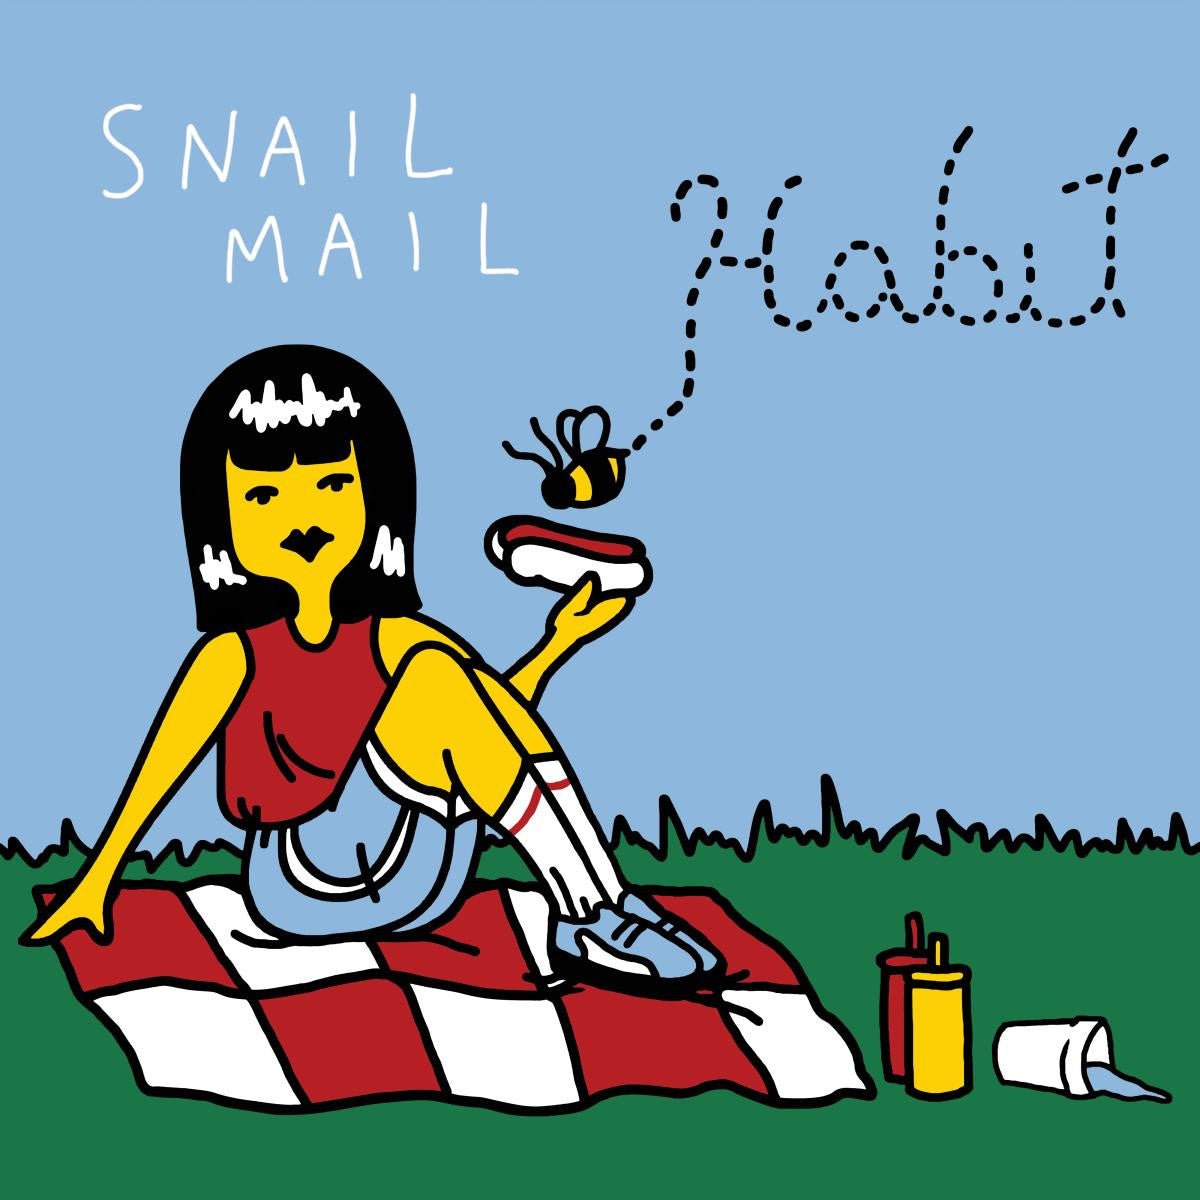 Snail Mail: Habit: Black Vinyl LP - Steadfast Records